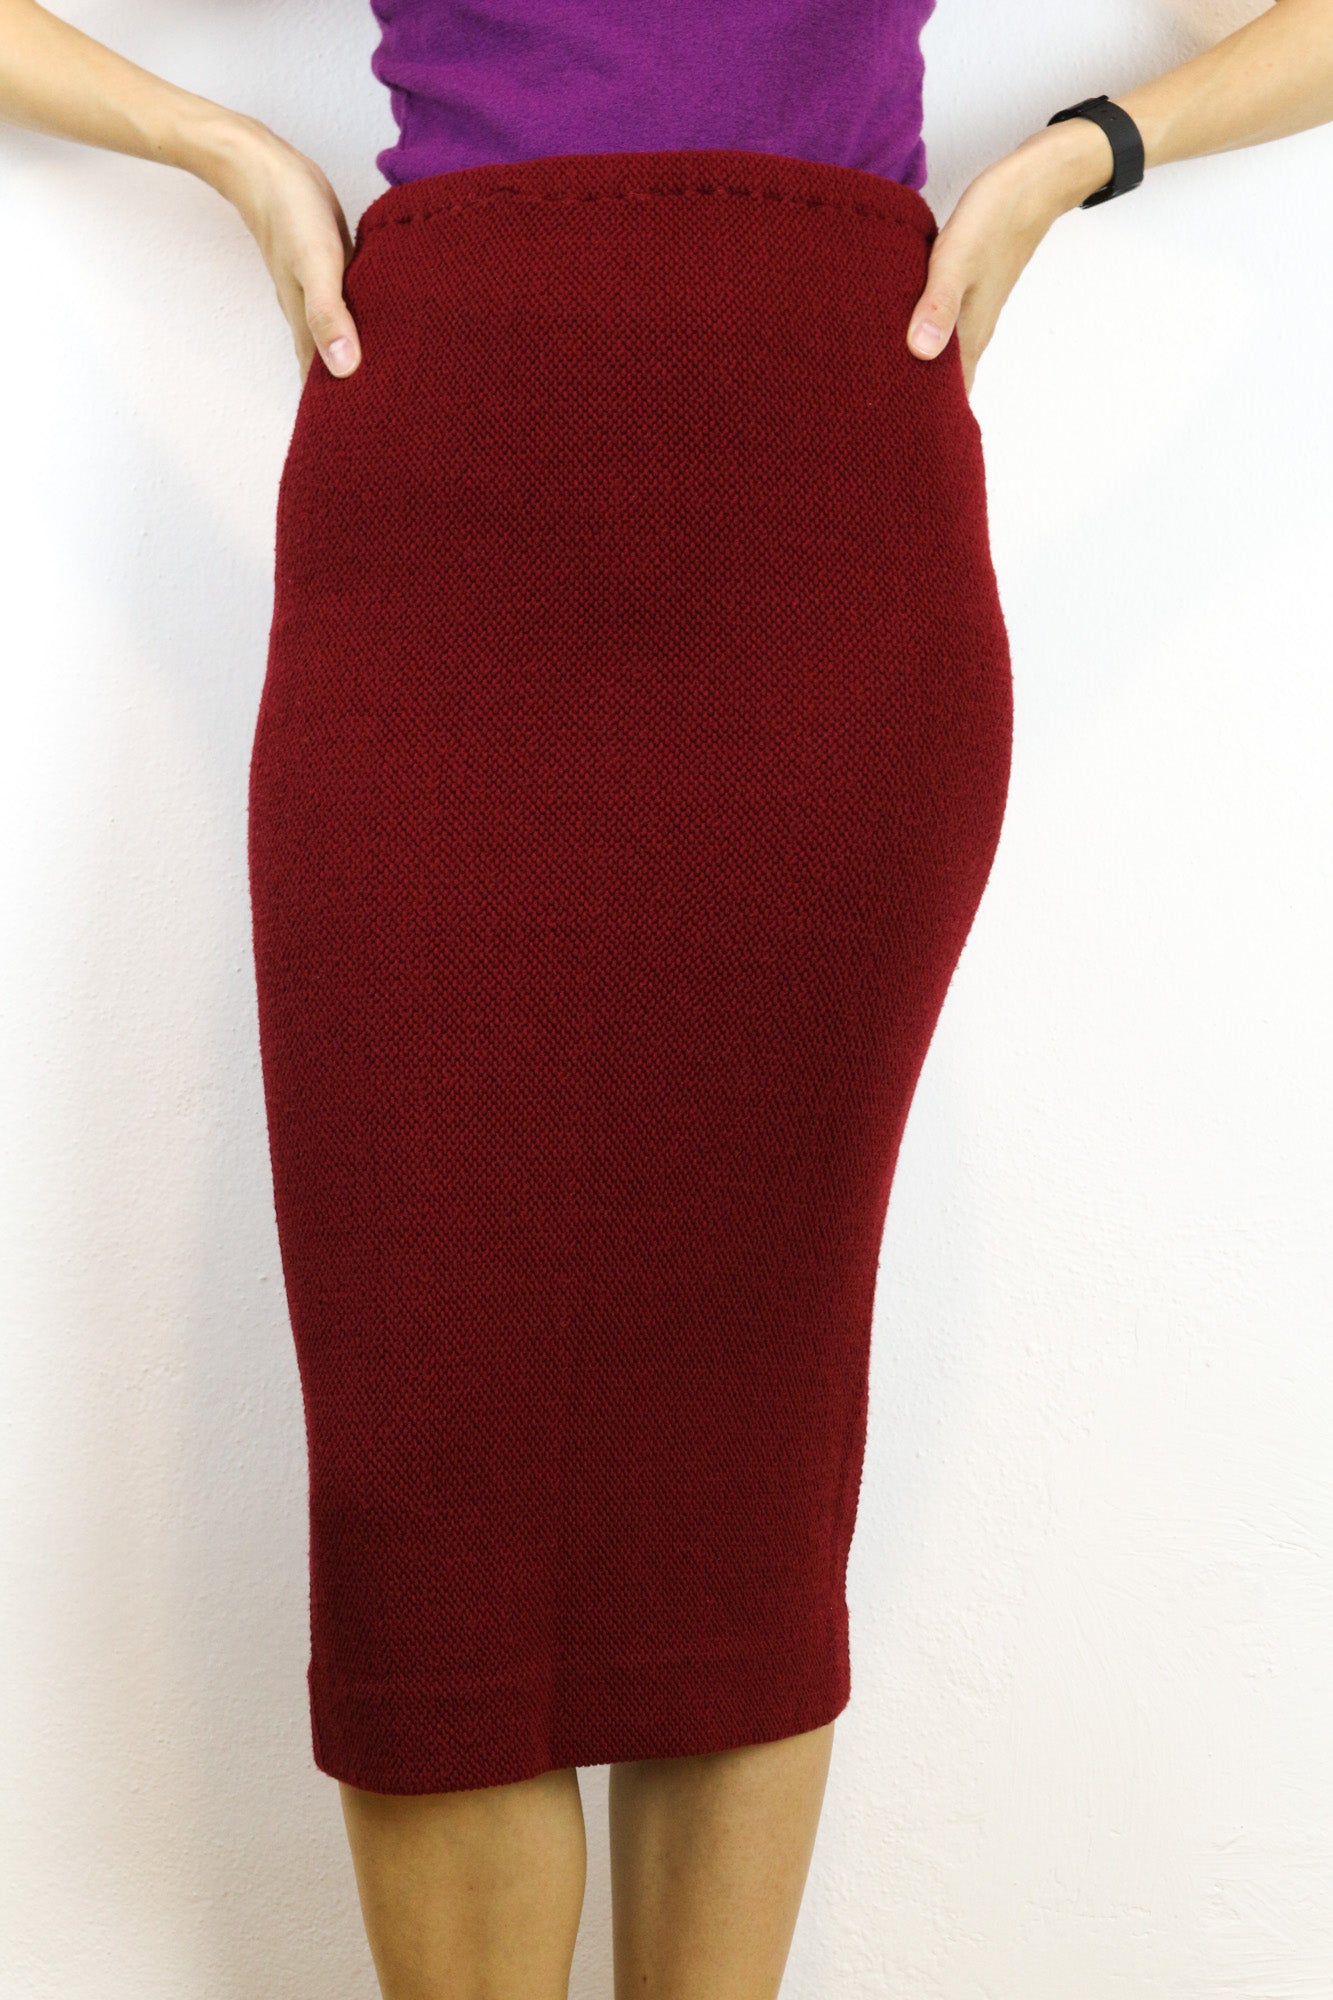 Vintage knitted skirt